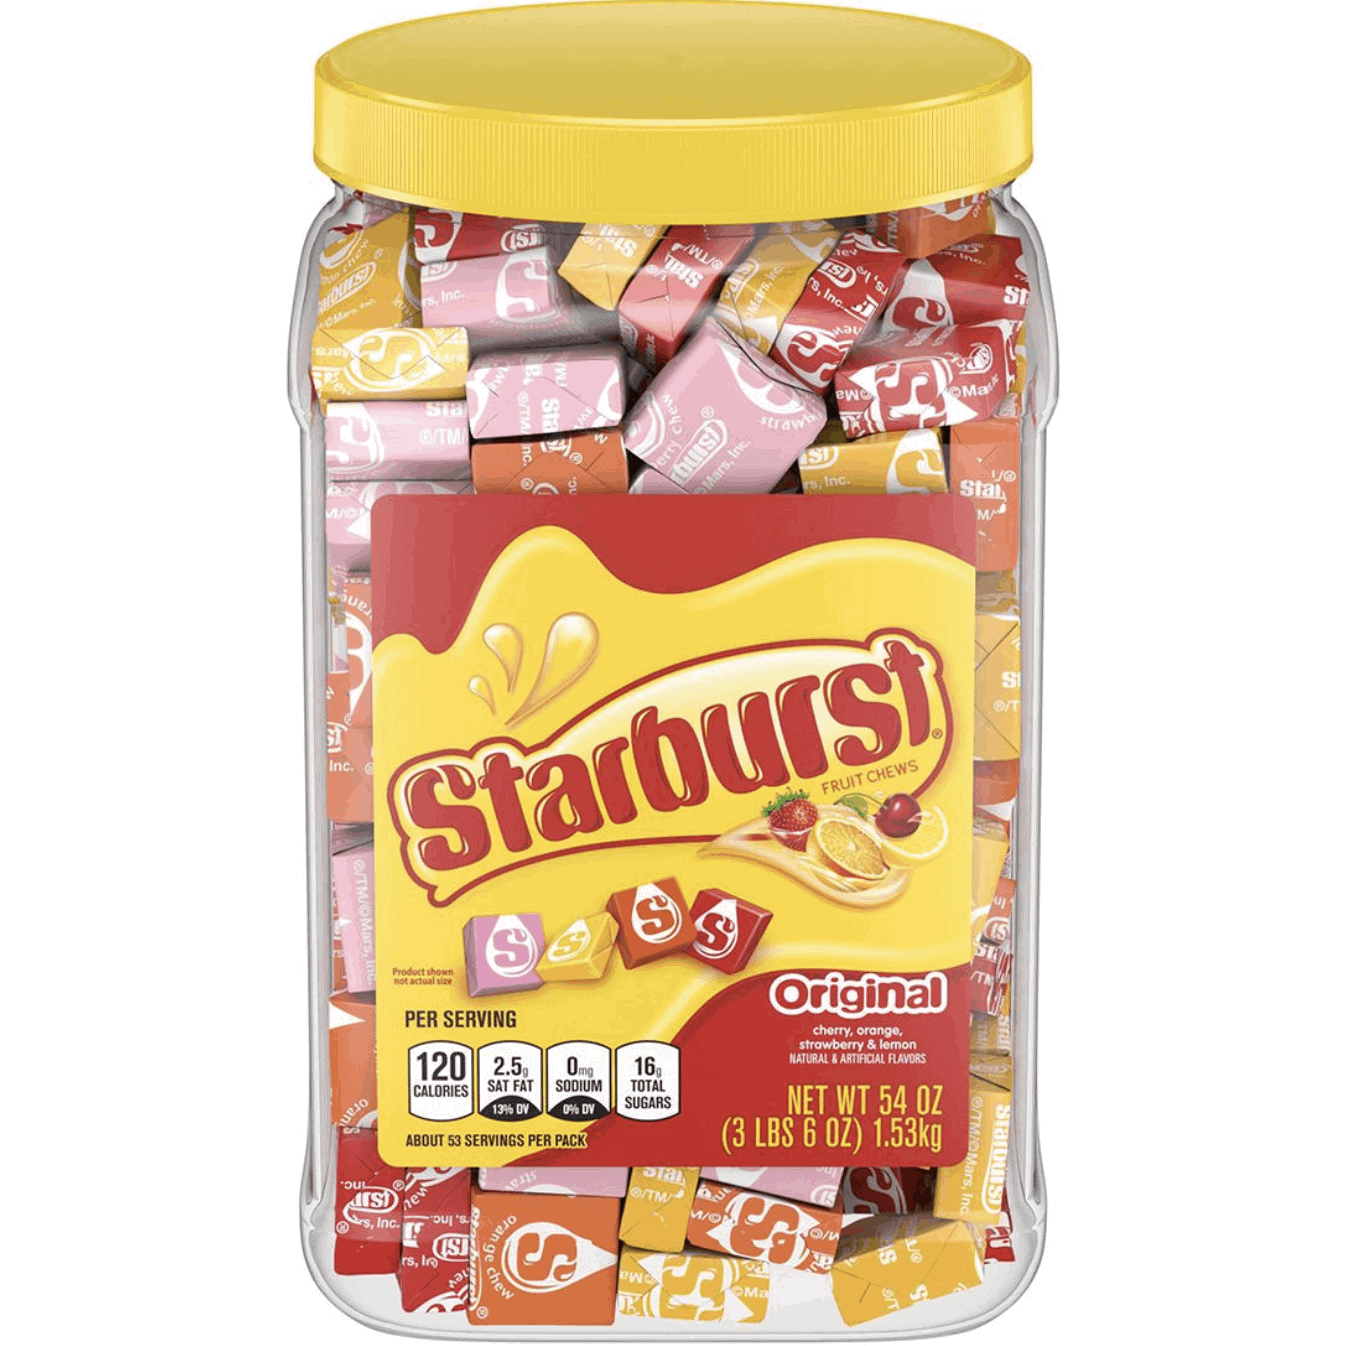 Starburst Original Fruit Chew Candy Jar, 54 oz.